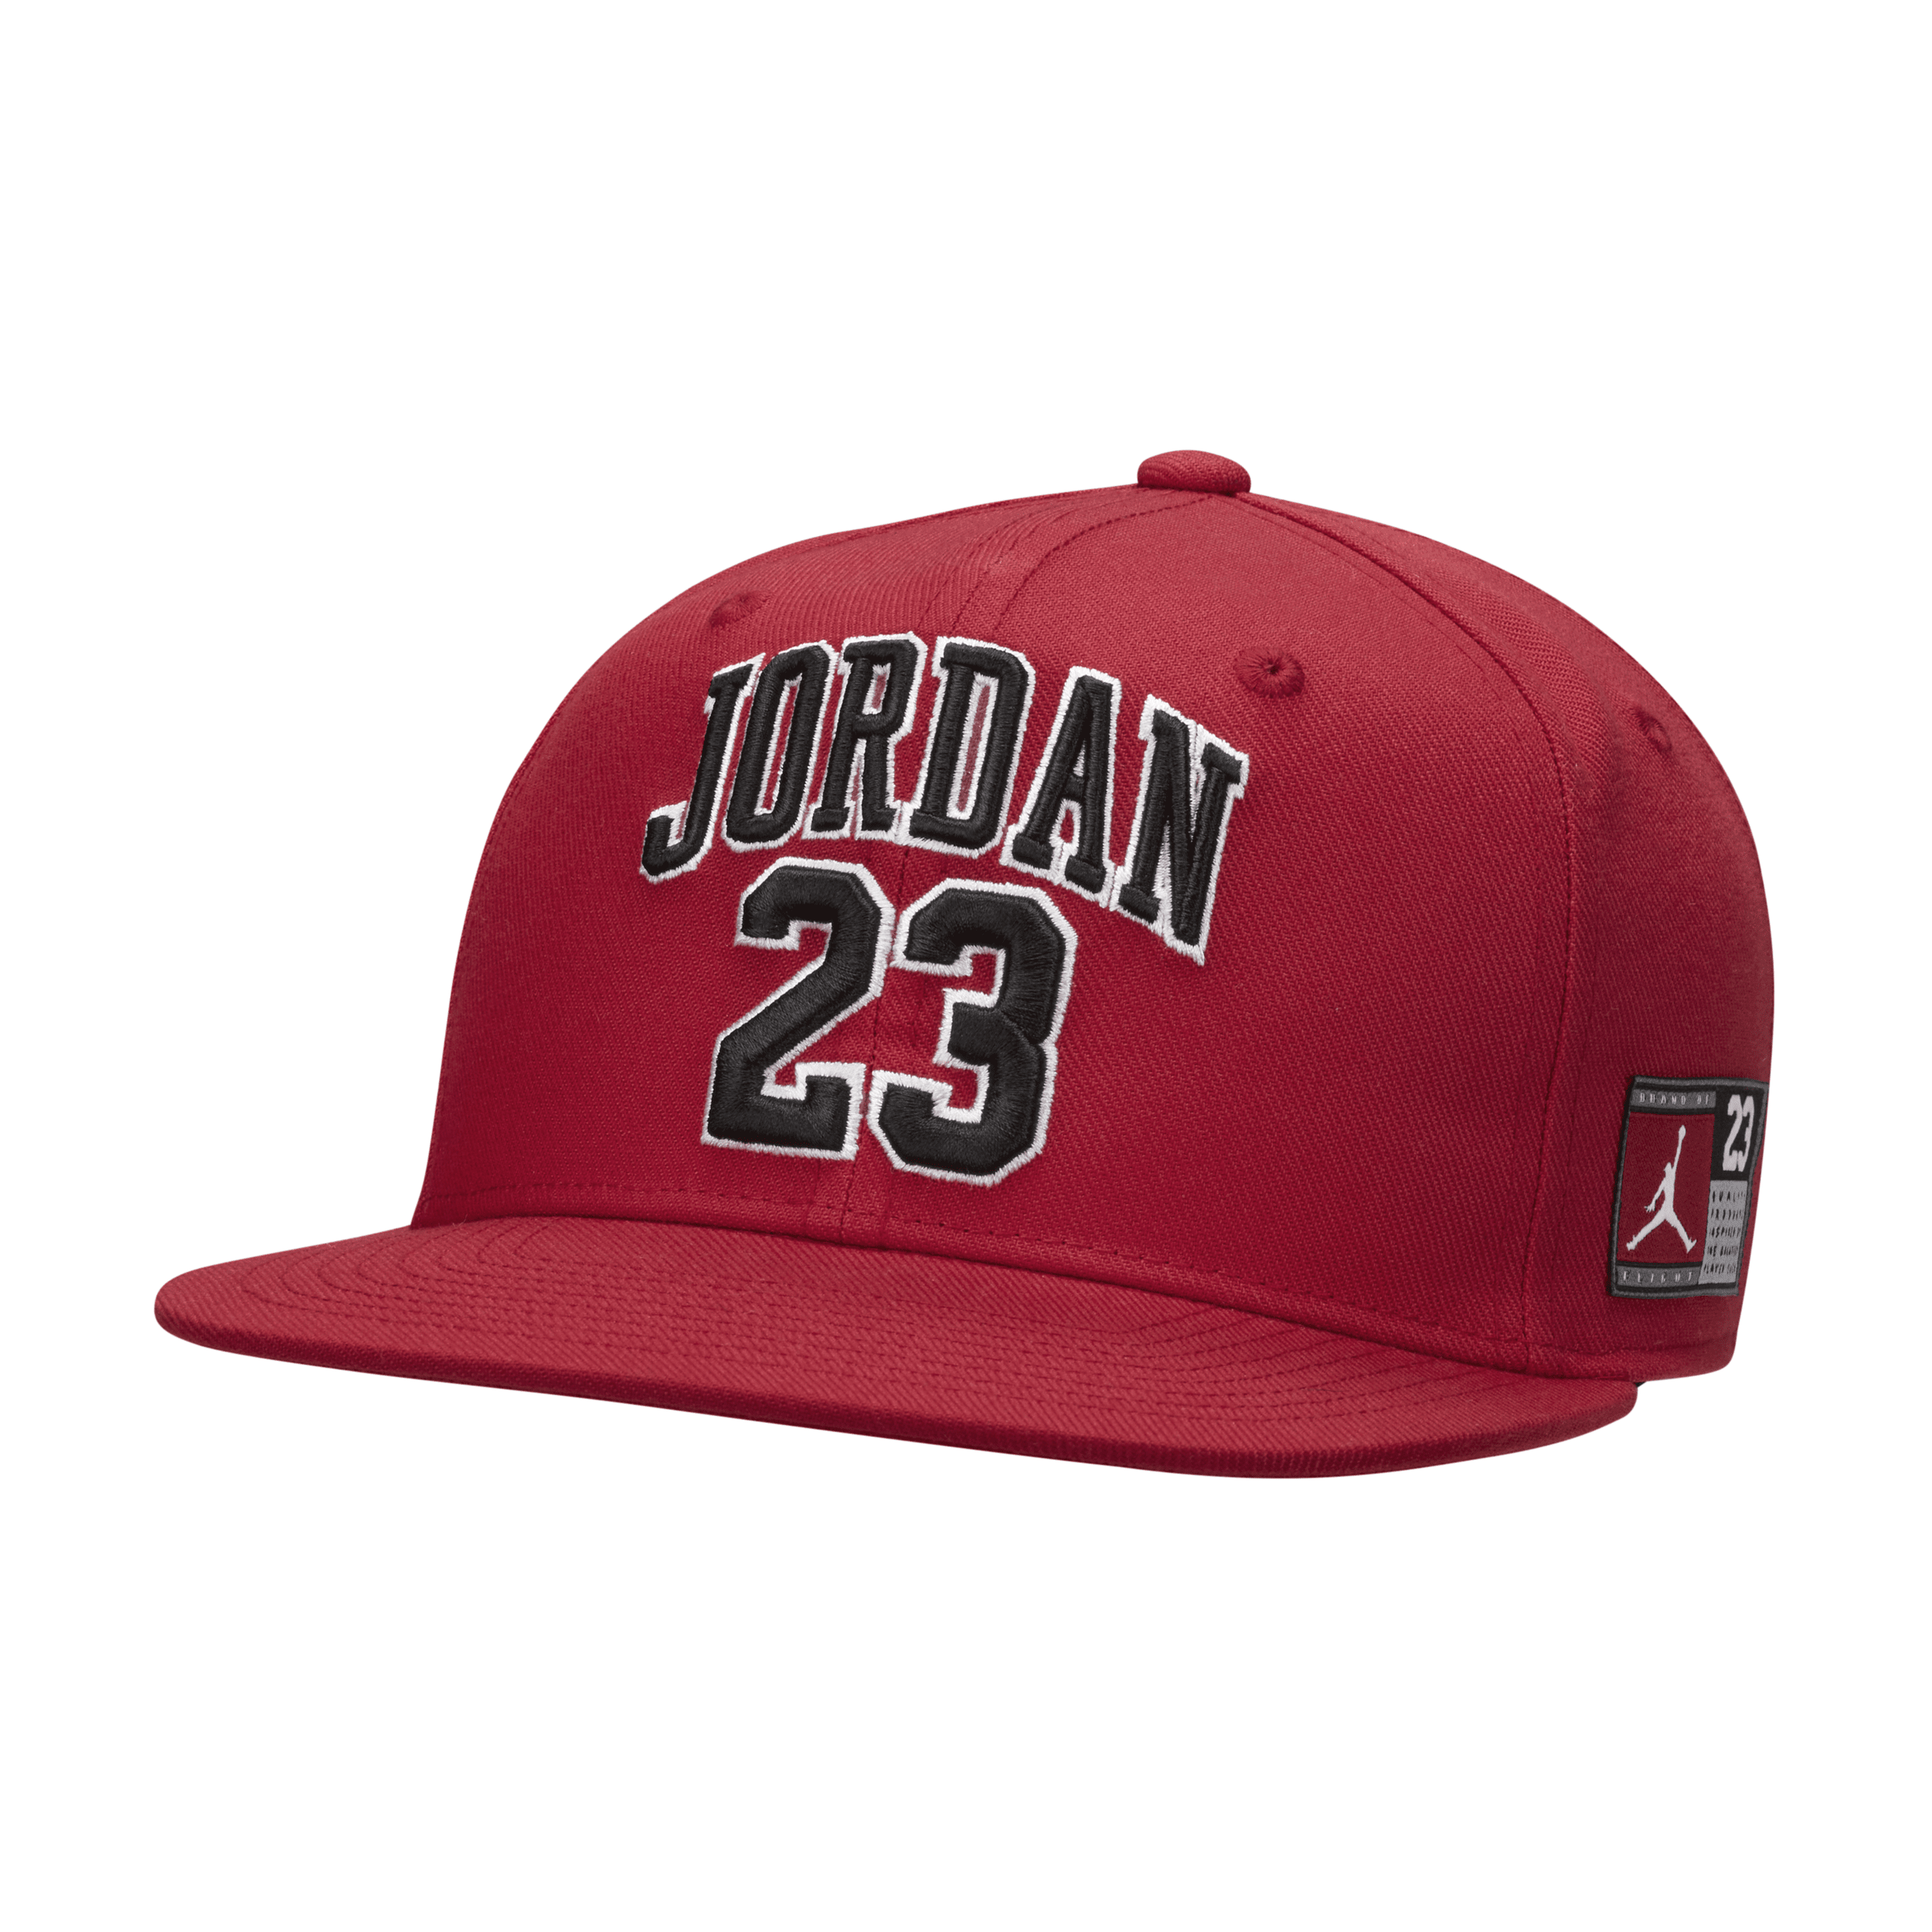 Jordan Jersey Flat Brim Cap Big Kids' Hat In Red